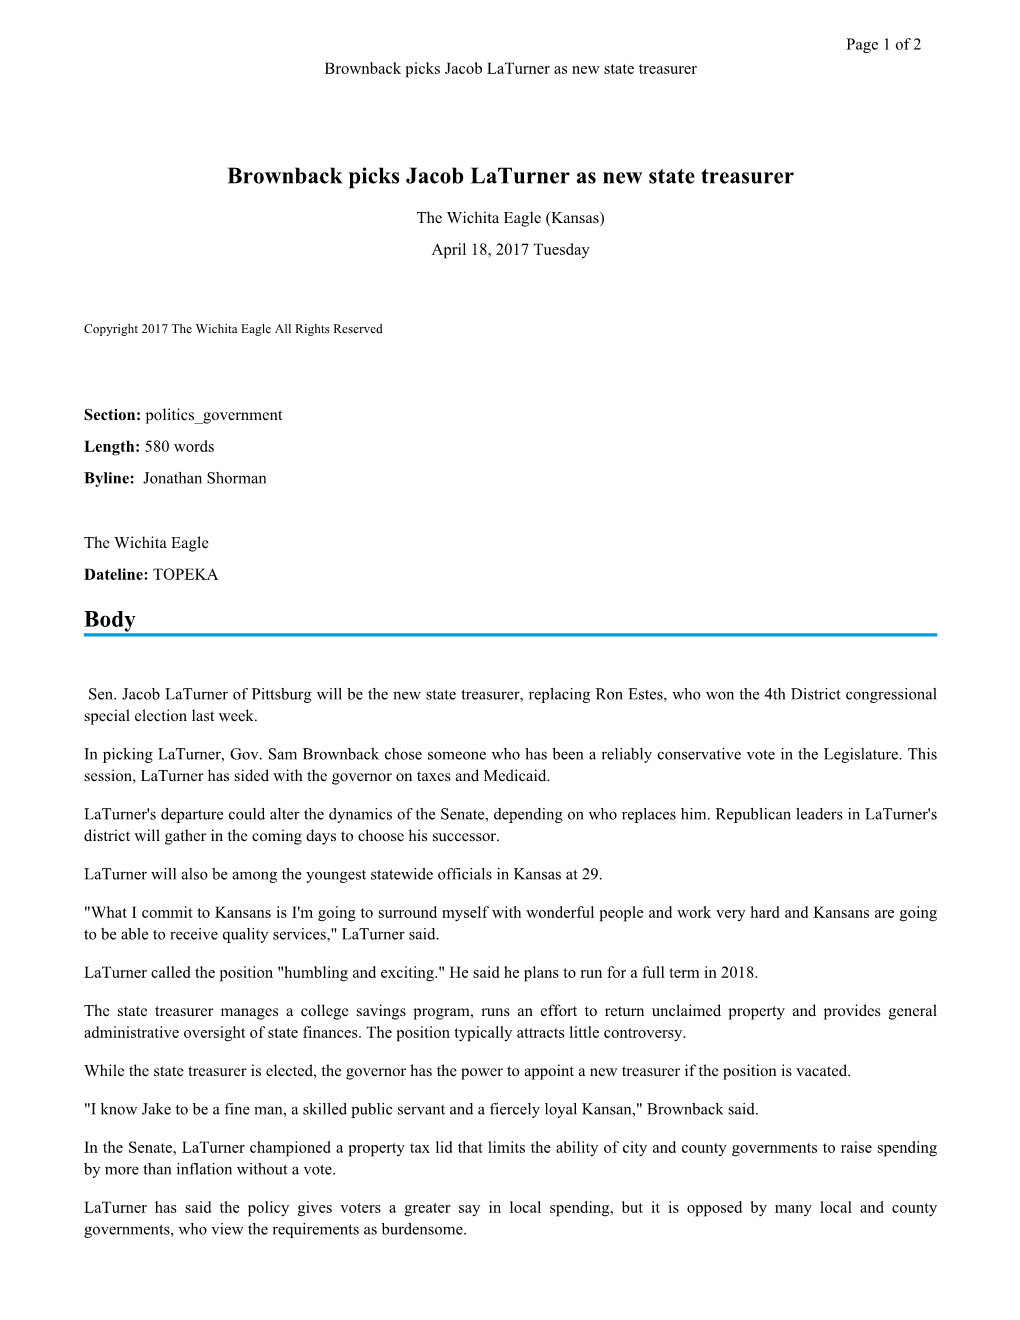 Brownback Picks Jacob Laturner As New State Treasurer Body